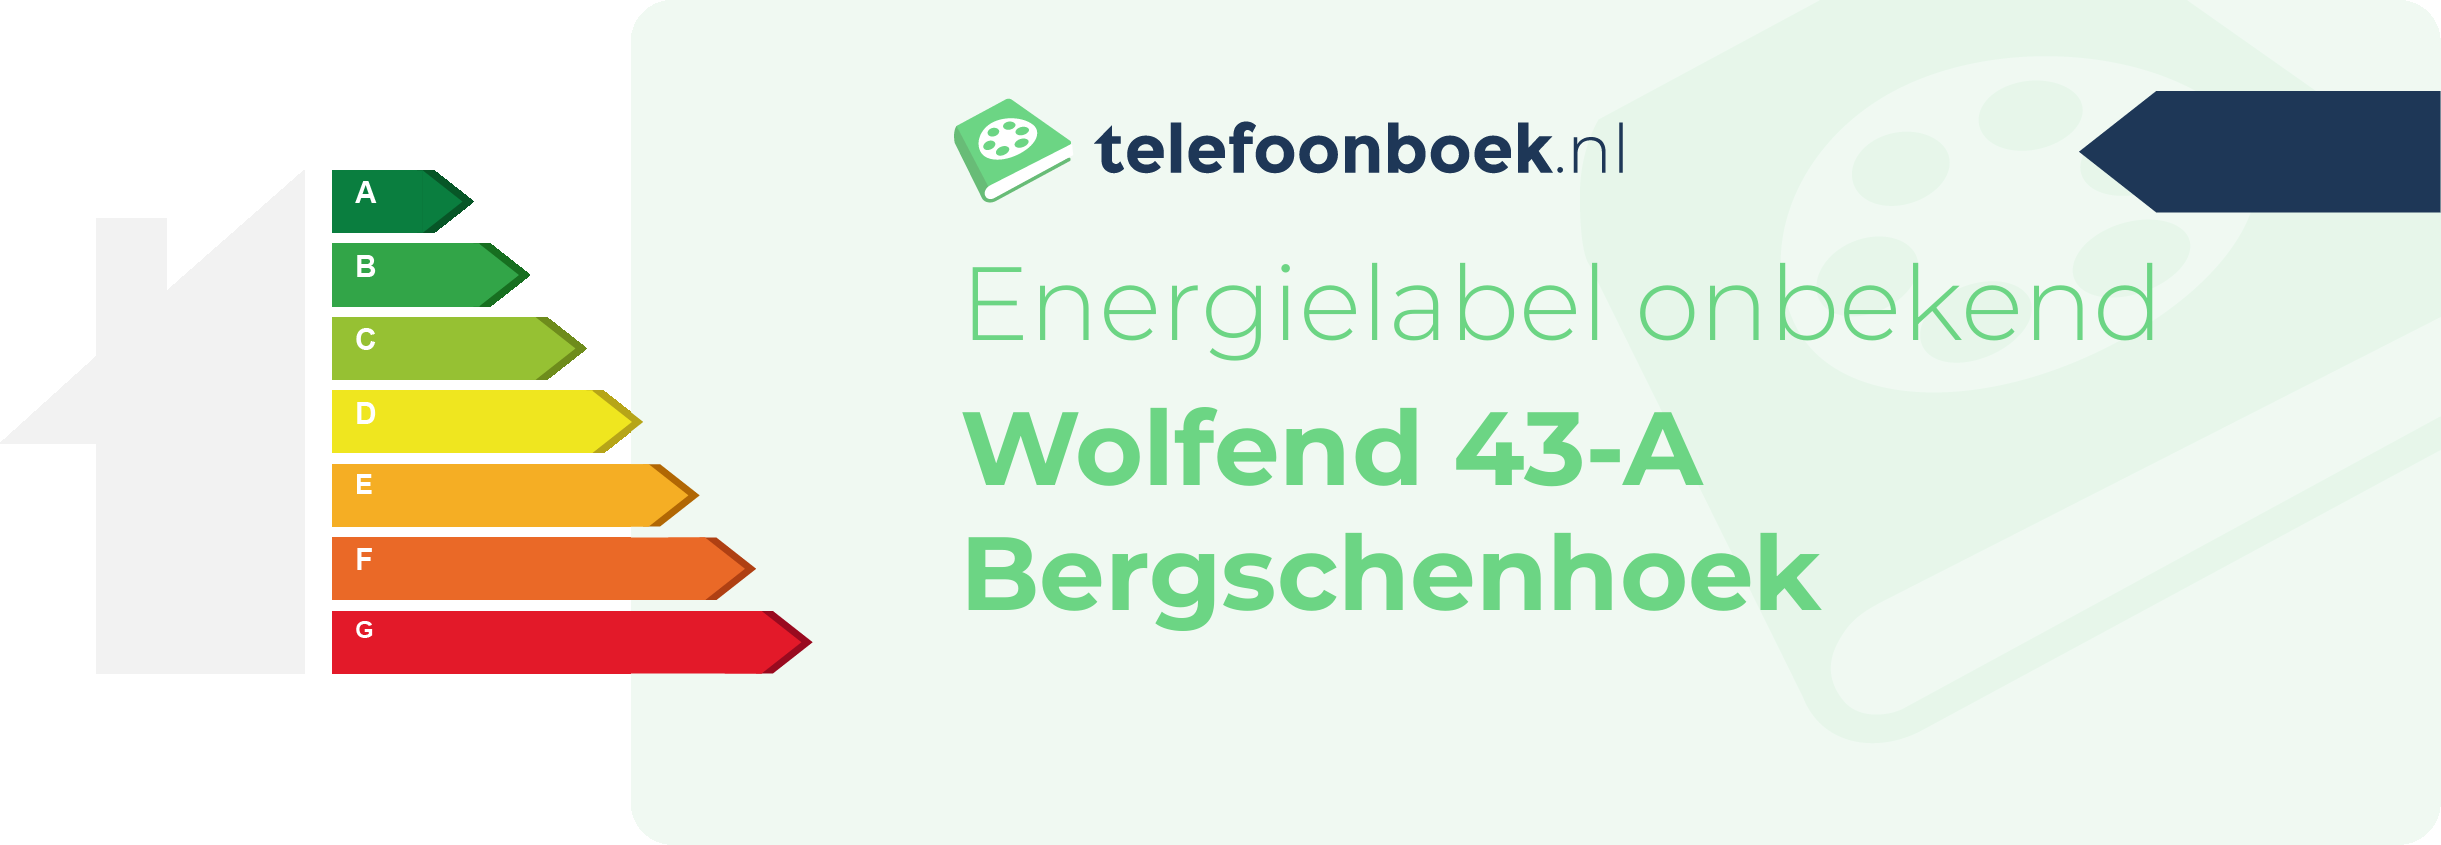 Energielabel Wolfend 43-A Bergschenhoek